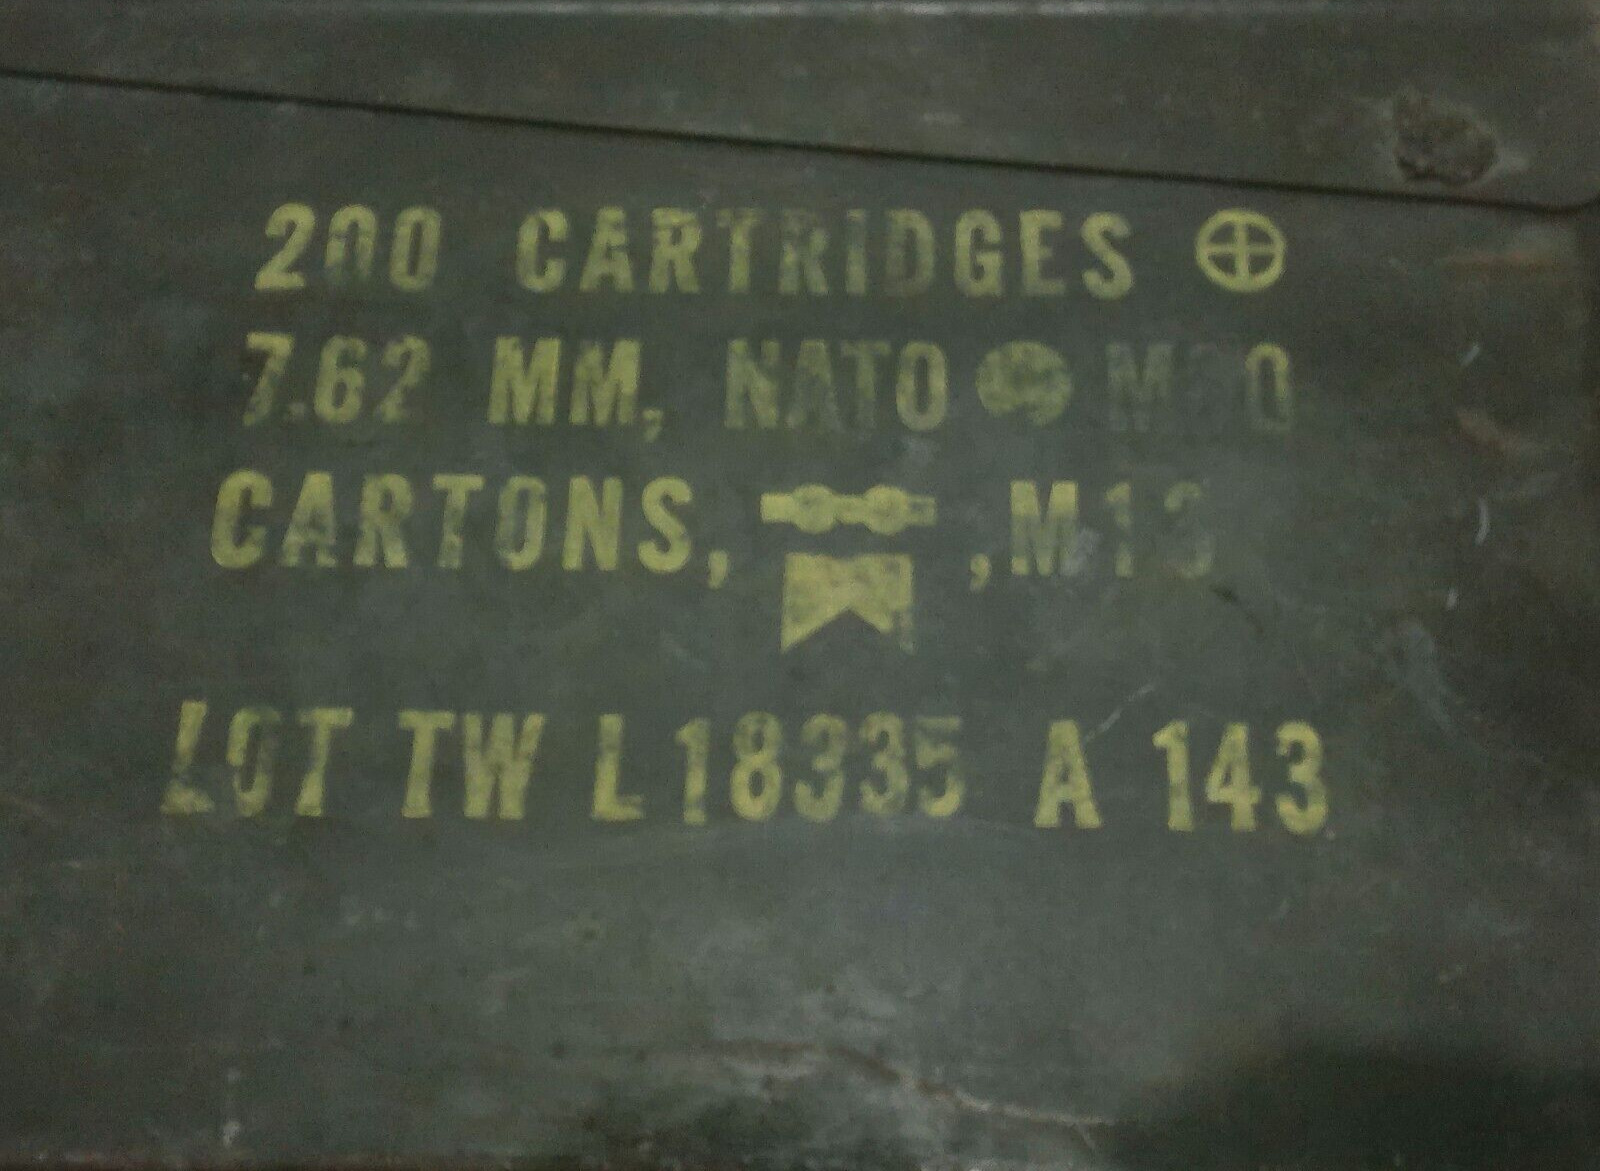 Ammo Box 7.62mm NATO 200 Cartridge M80 M13 LOT TW L 18335 A 143 RARE VINTAGE VET